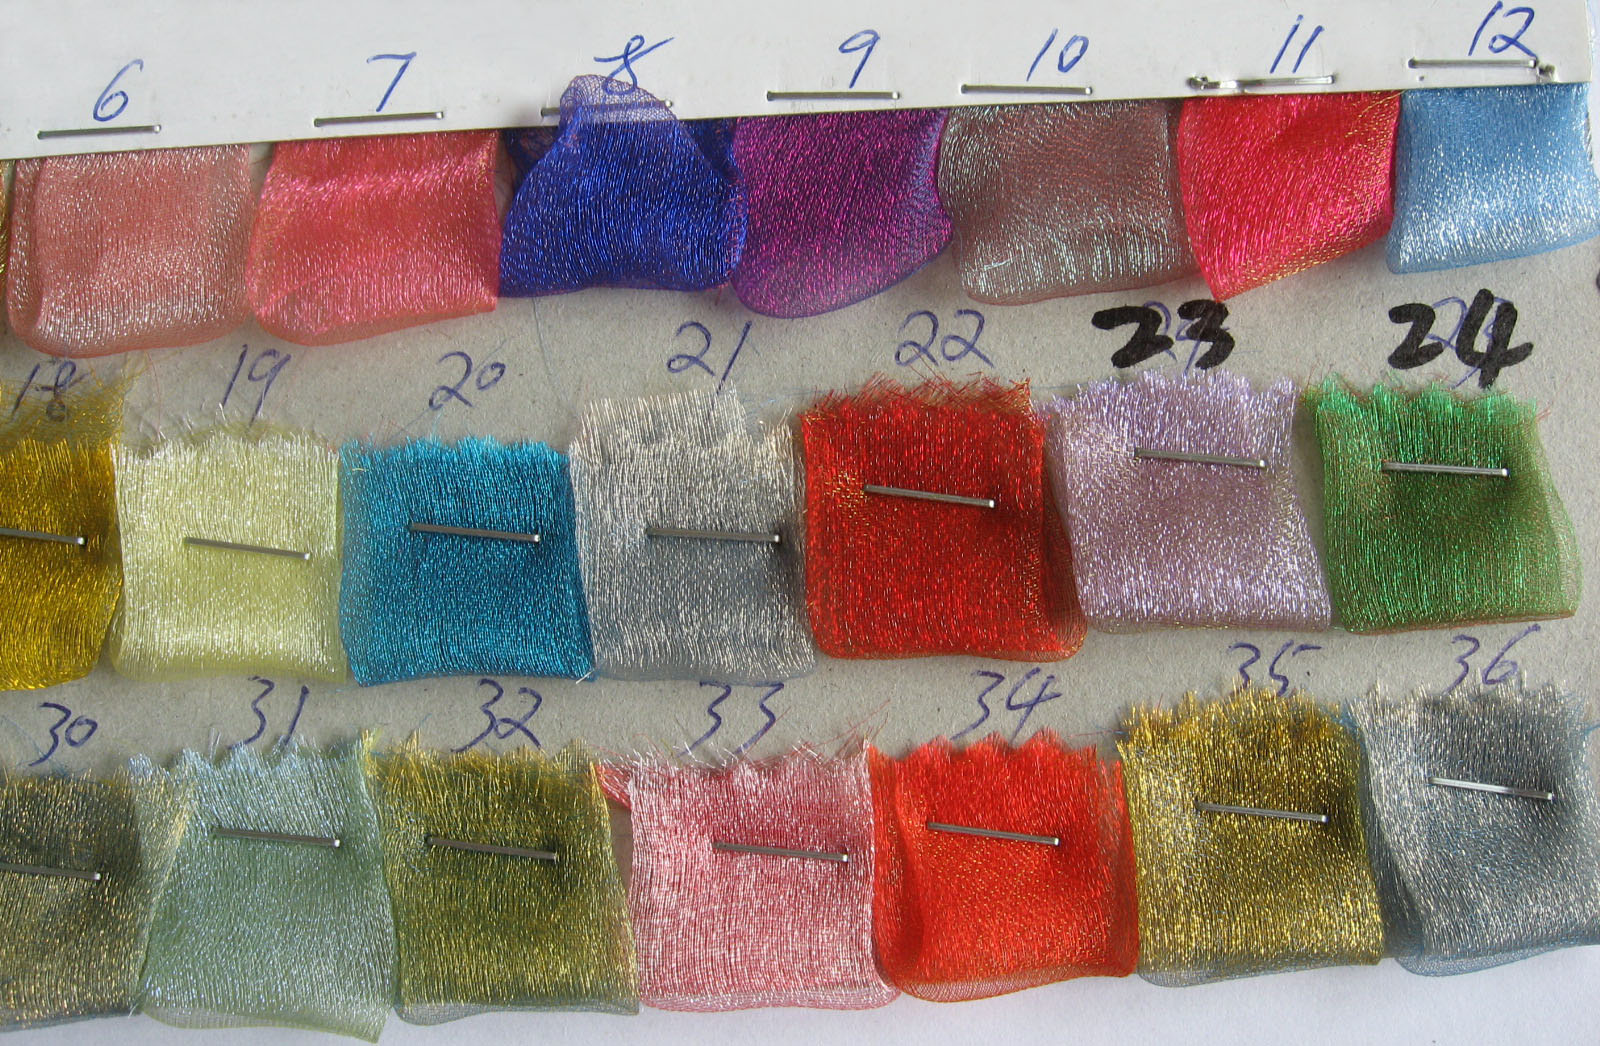 Two Tone Organza Fabric Color Chart